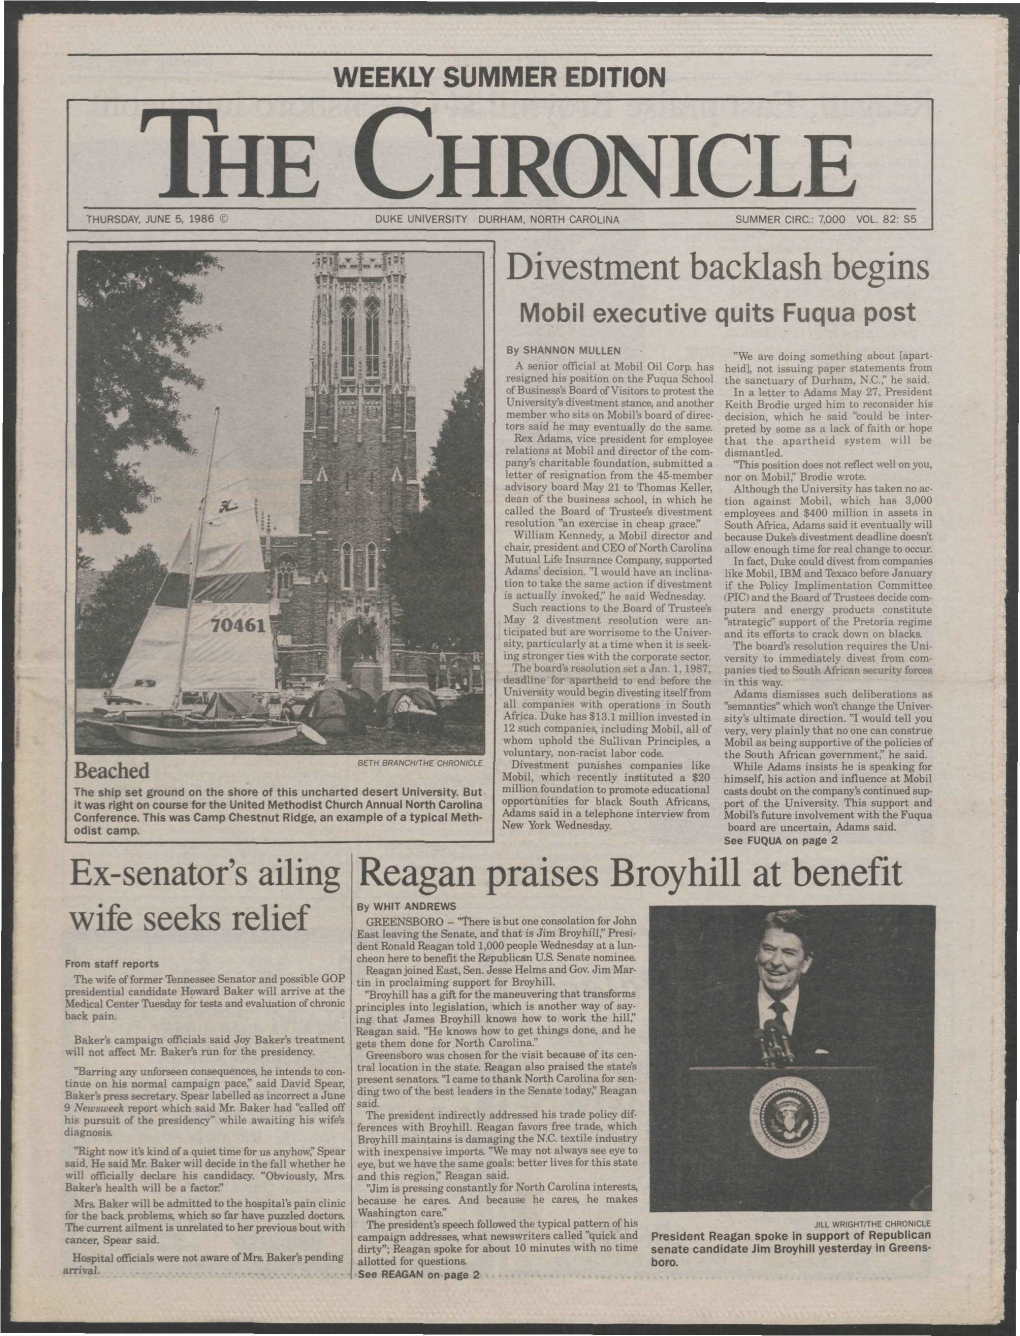 The Chronicle Thursday, June 5, 1986 © Duke University Durham, North Carolina Summer Circ: 7,000 Vol